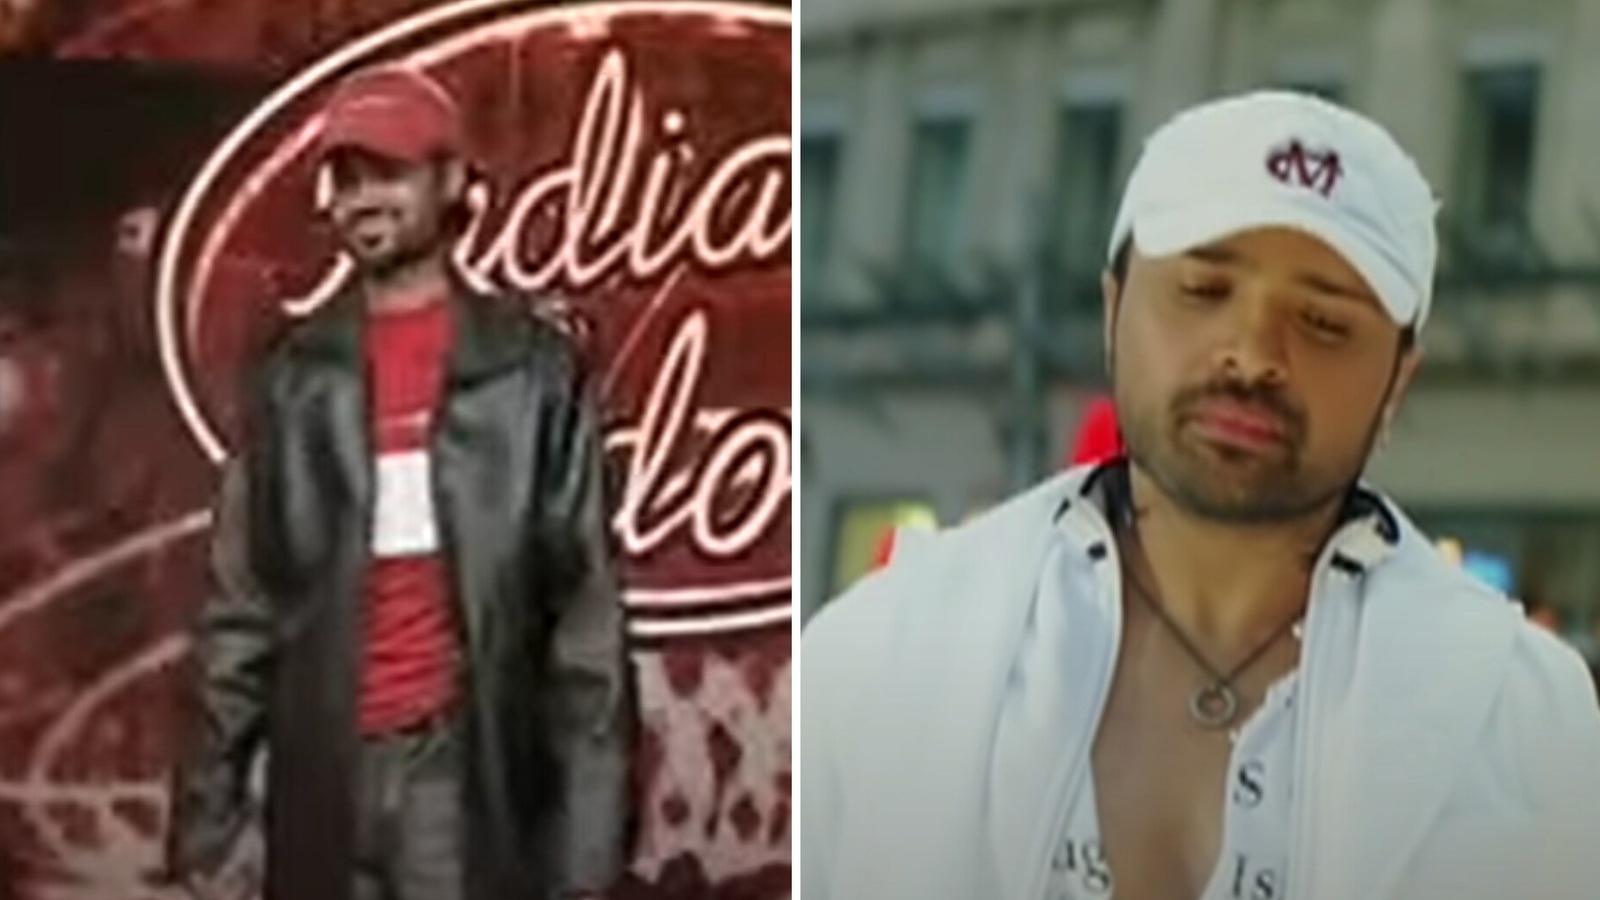 When Himesh Reshammiya's duplicate showed up at Indian Idol audition and  Anu Malik walked out. Watch - Hindustan Times